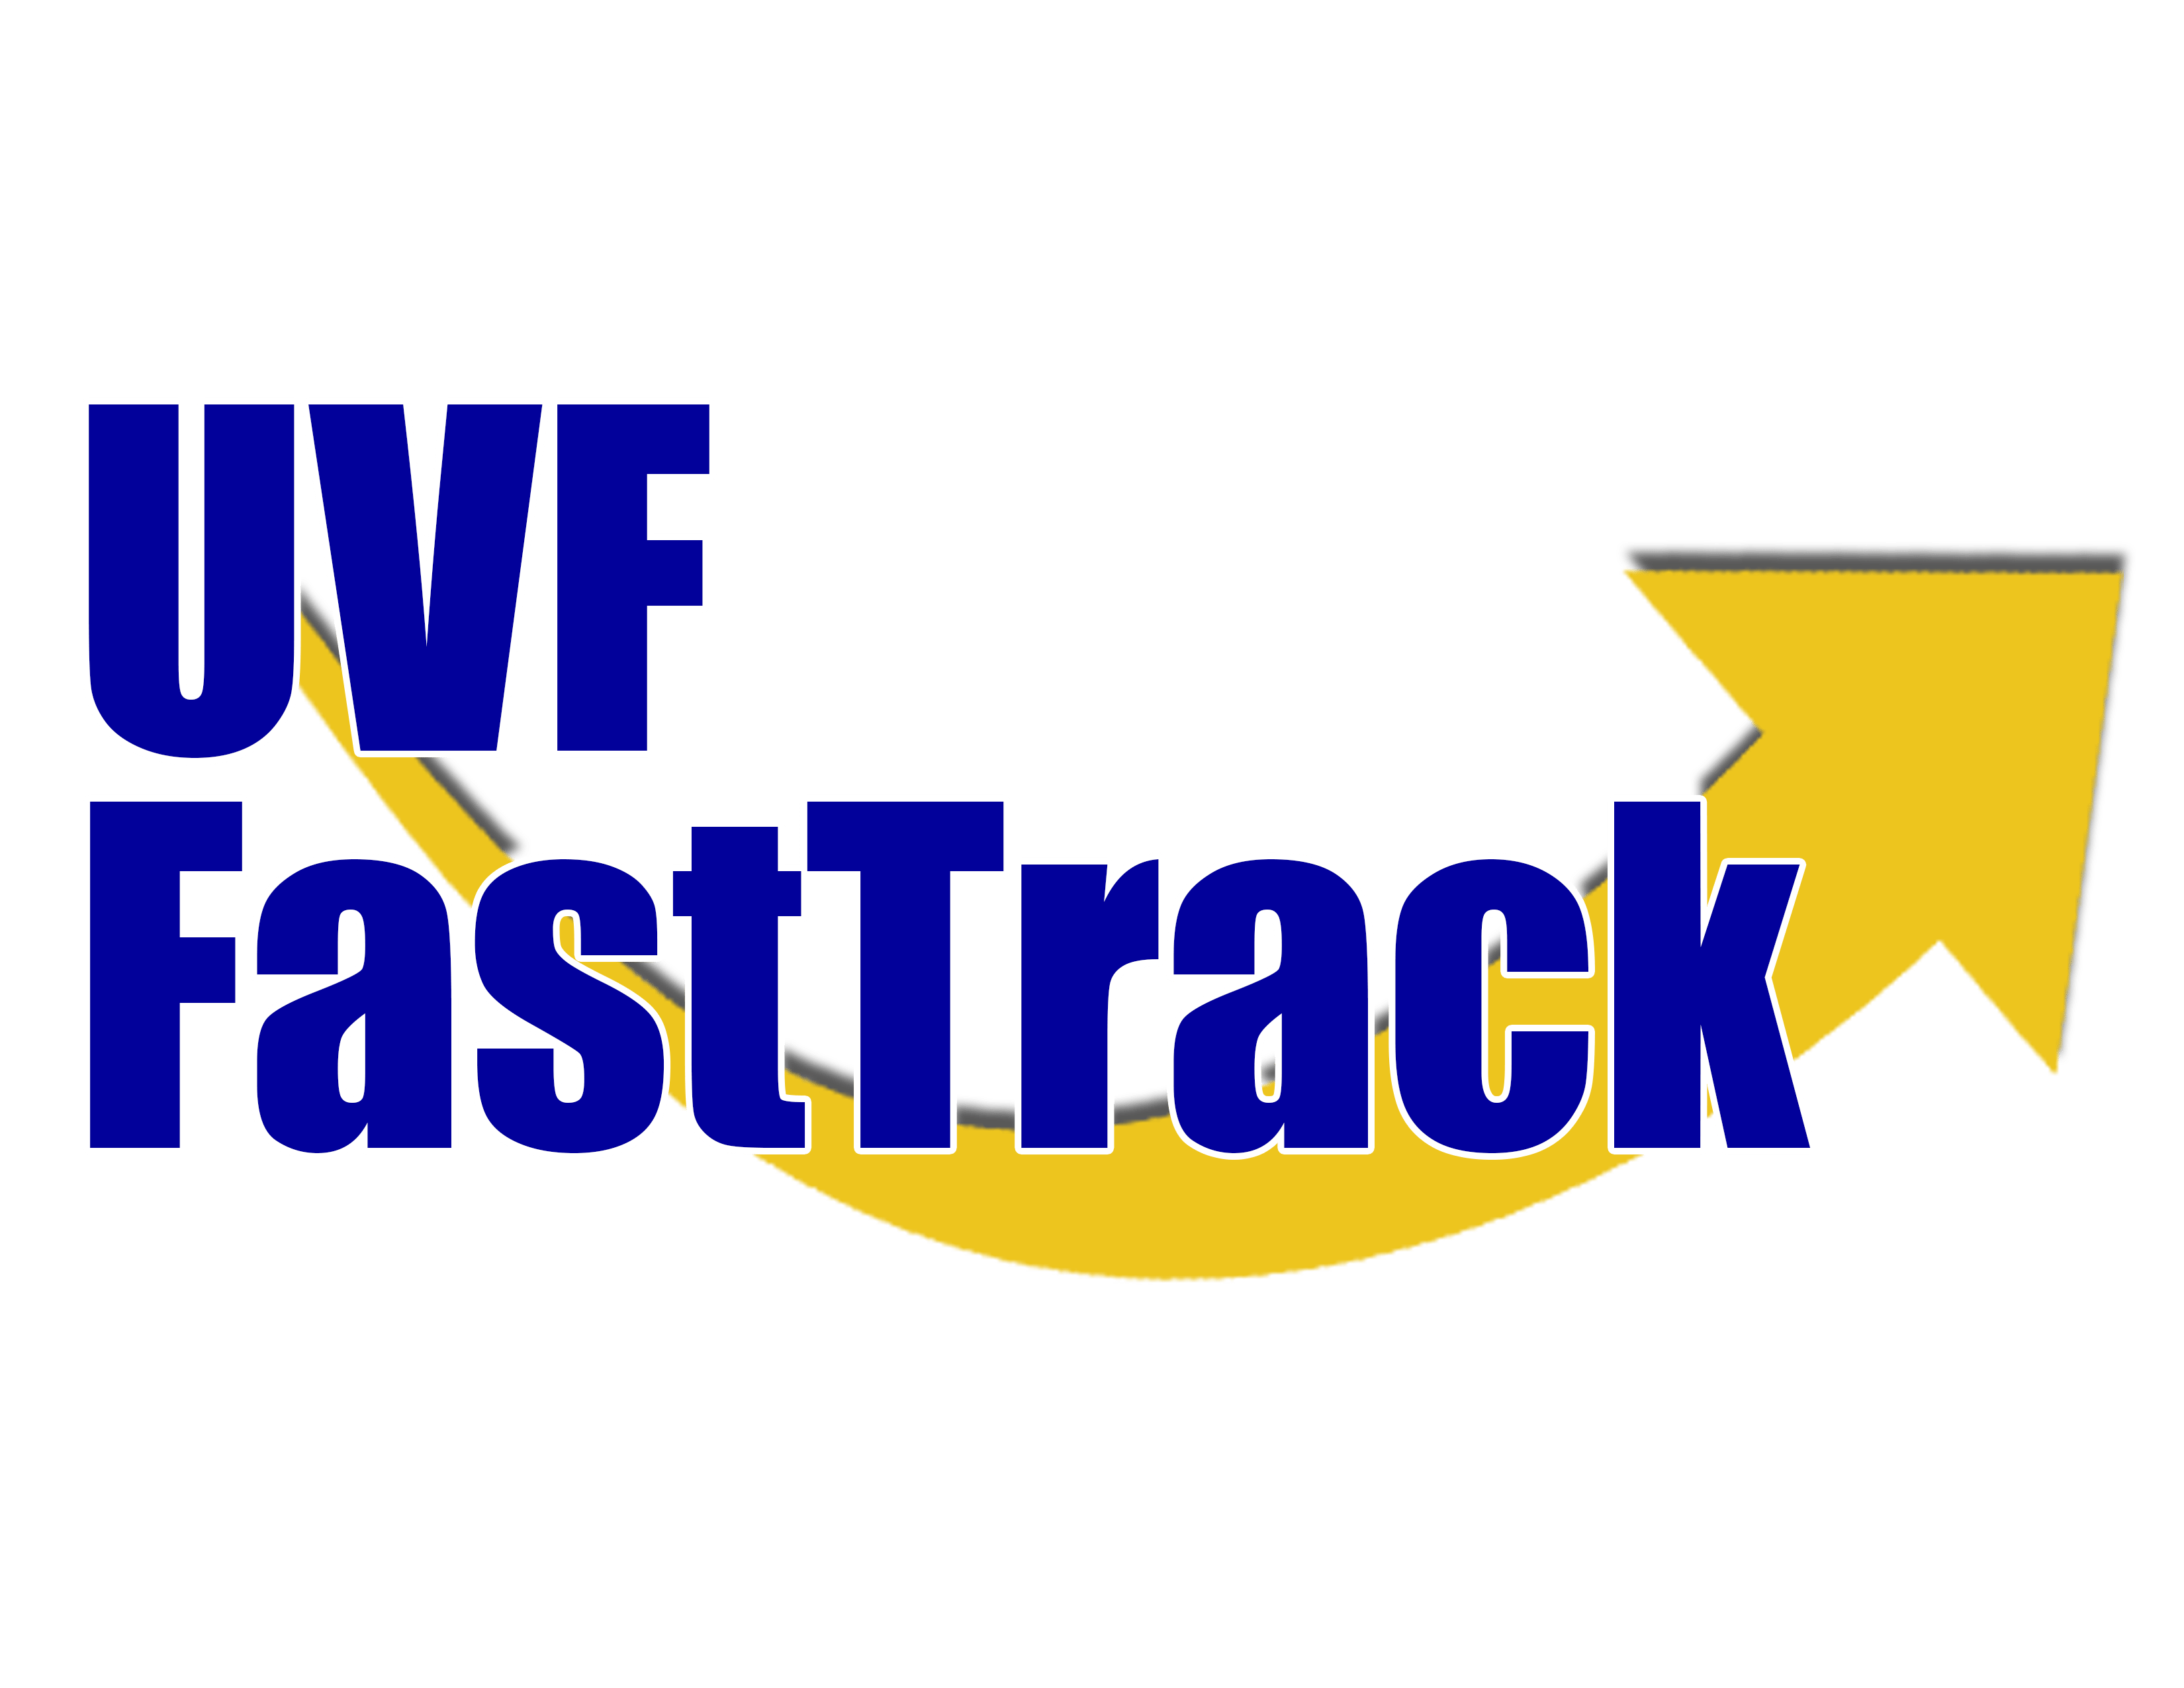 UVF FastTrack